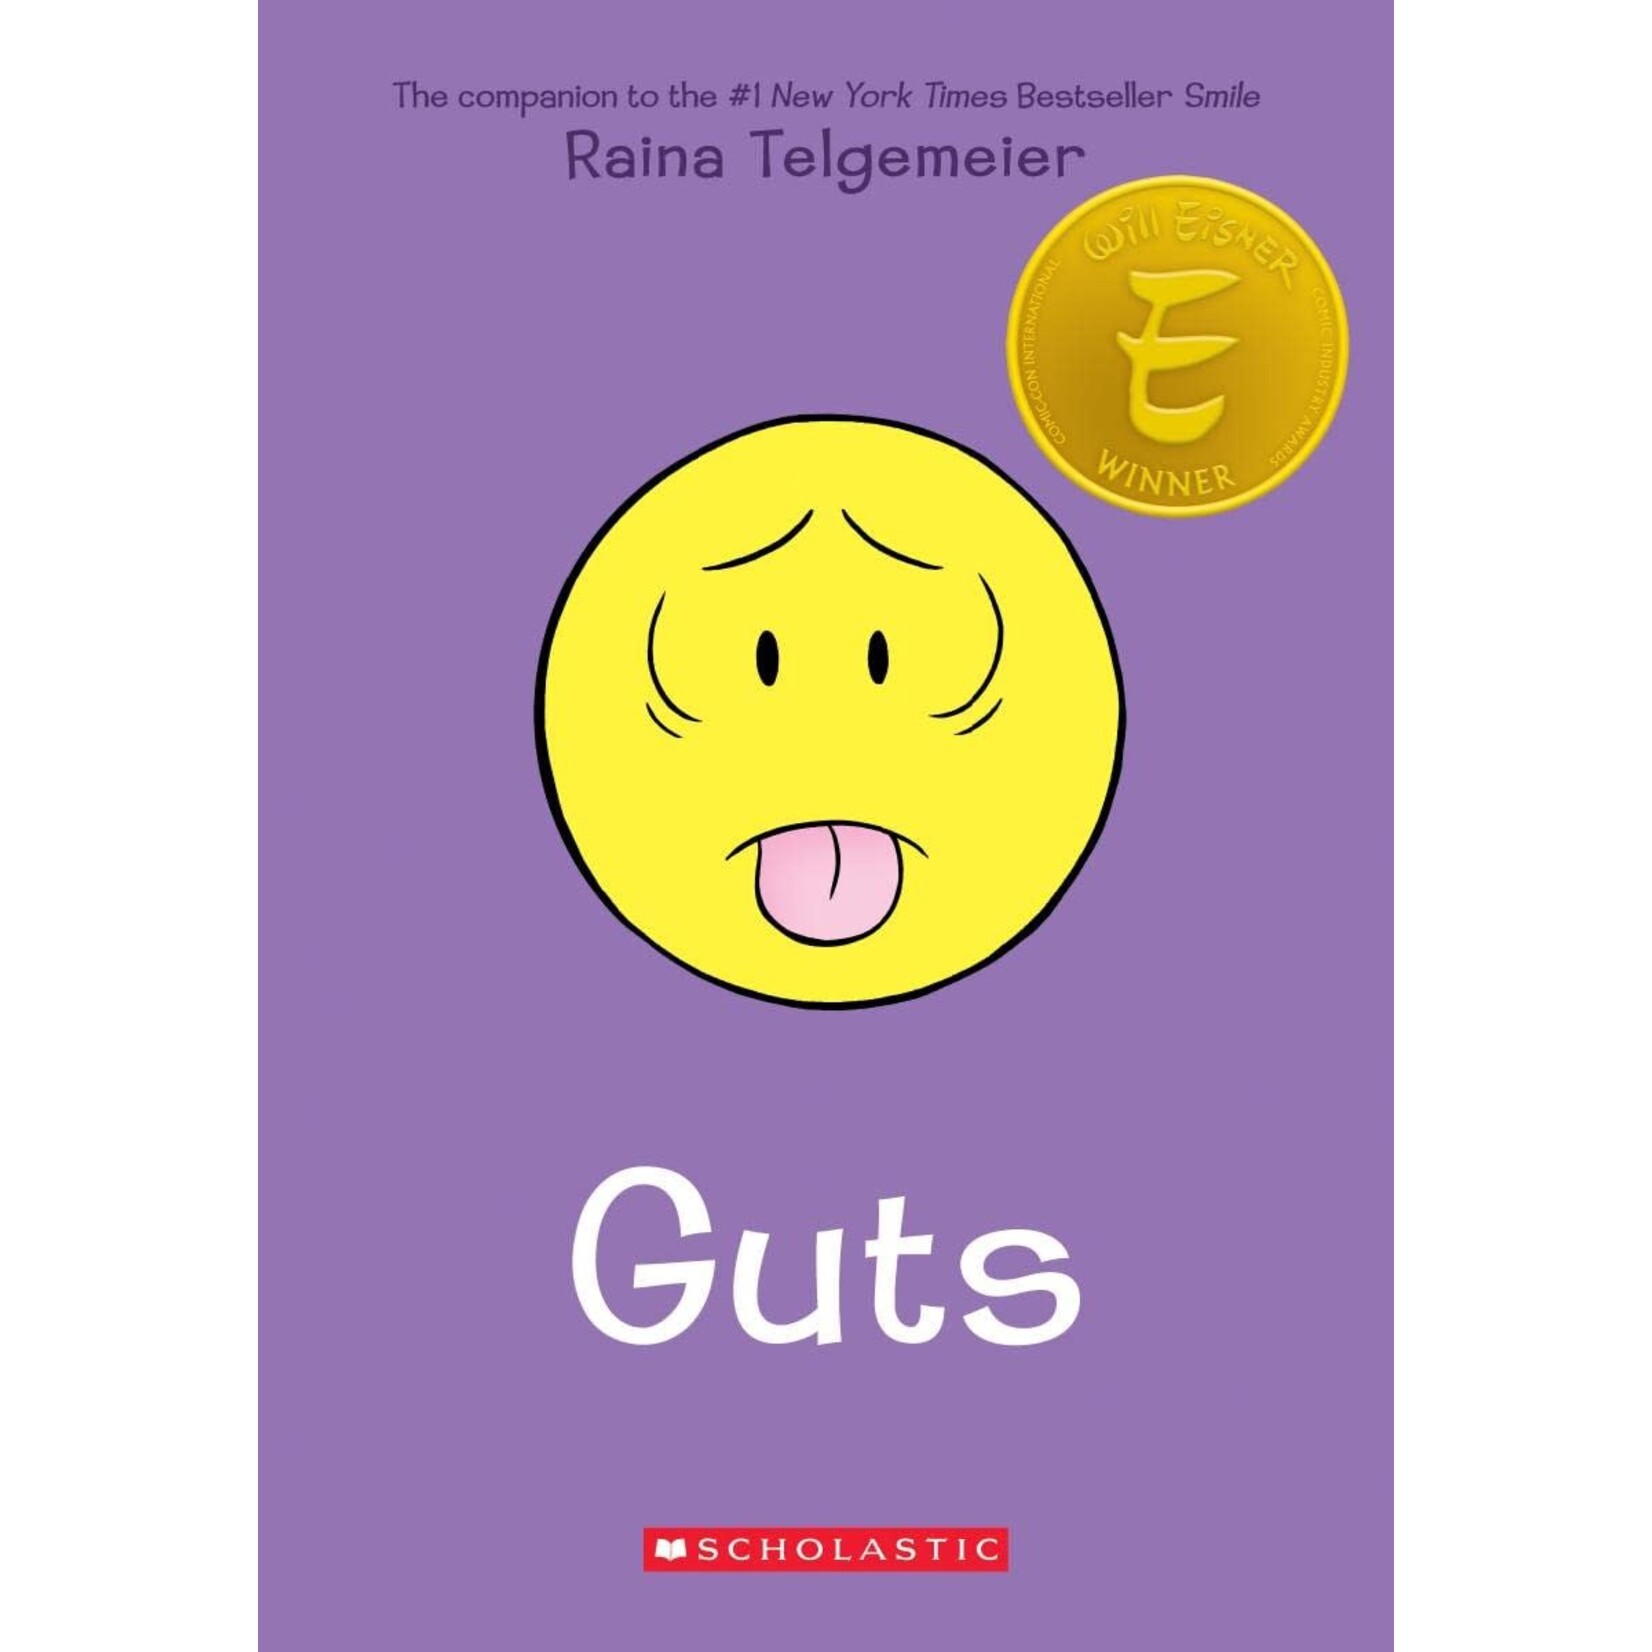 Guts (Smile #3, Graphic Novel)